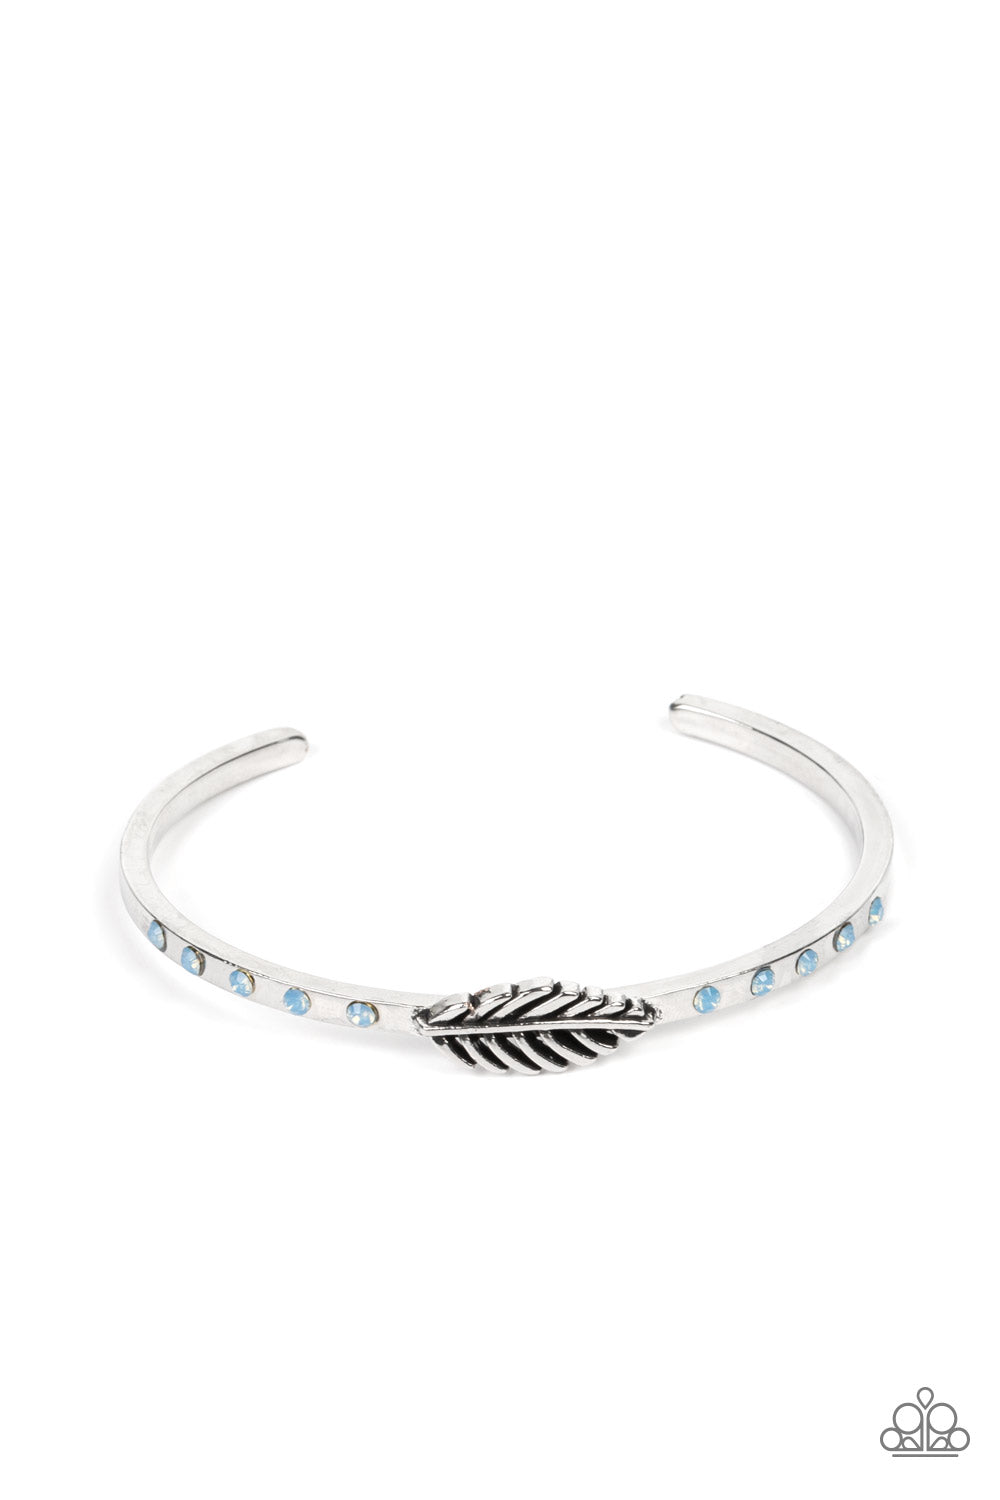 Free-Spirited Shimmer - blue - Paparazzi bracelet